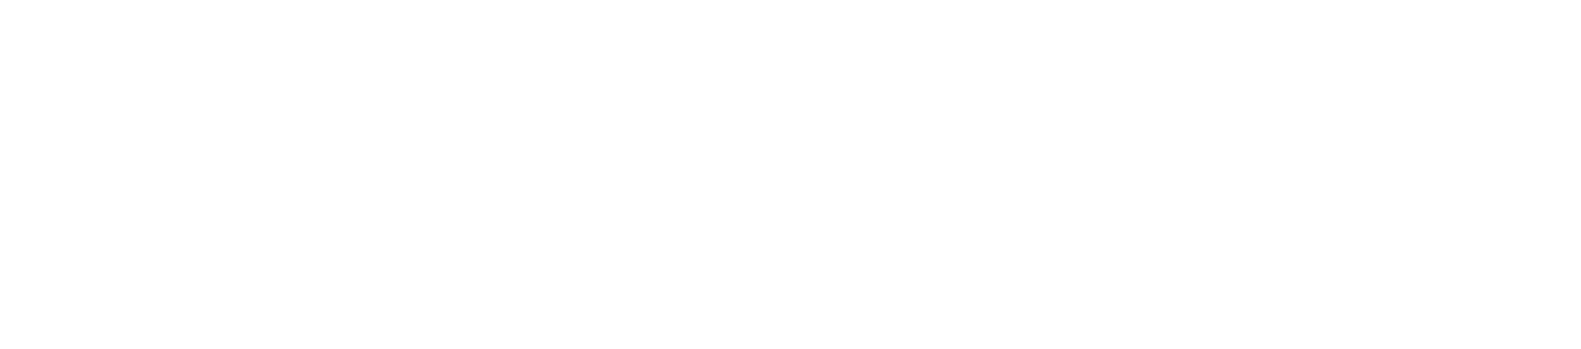 Shin-Etsu Chemical Logo groß für dunkle Hintergründe (transparentes PNG)